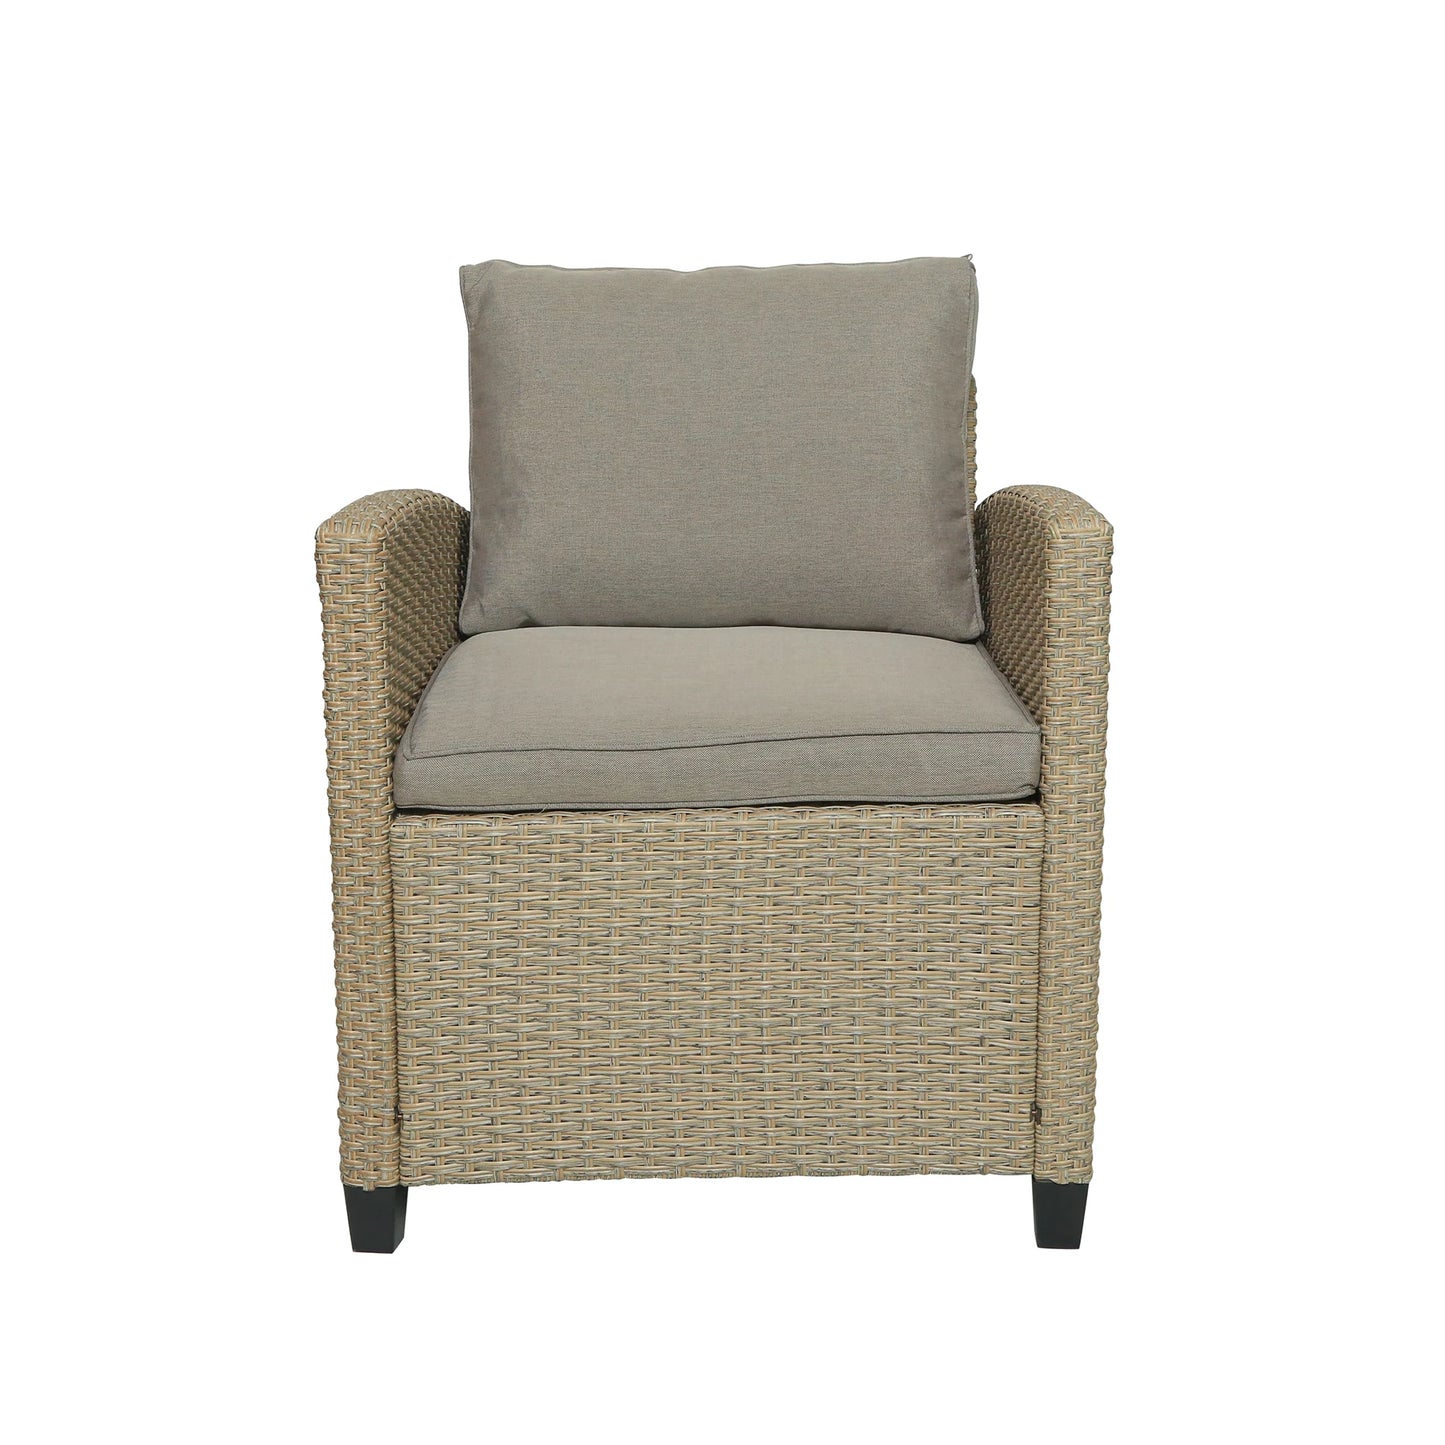 Patio Rattan Wicker Furniture Six Pcs Set, One 3 Seat Sofa, +2 Single Sofa Chair, +2 Stools, +1 Table